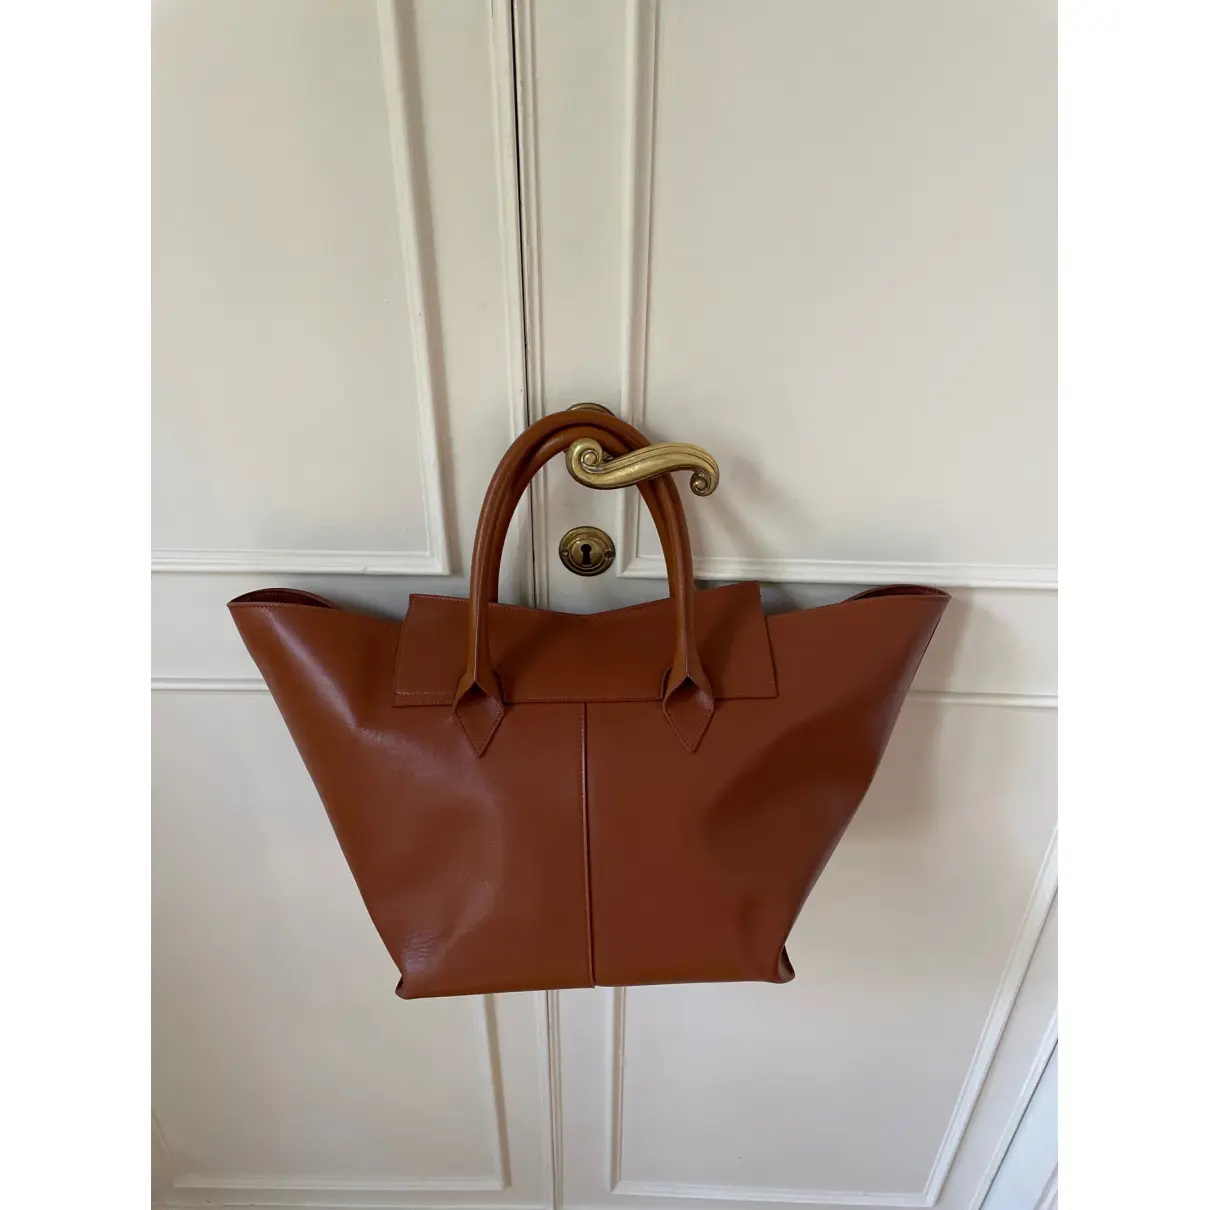 Buy Sara Battaglia Leather handbag online